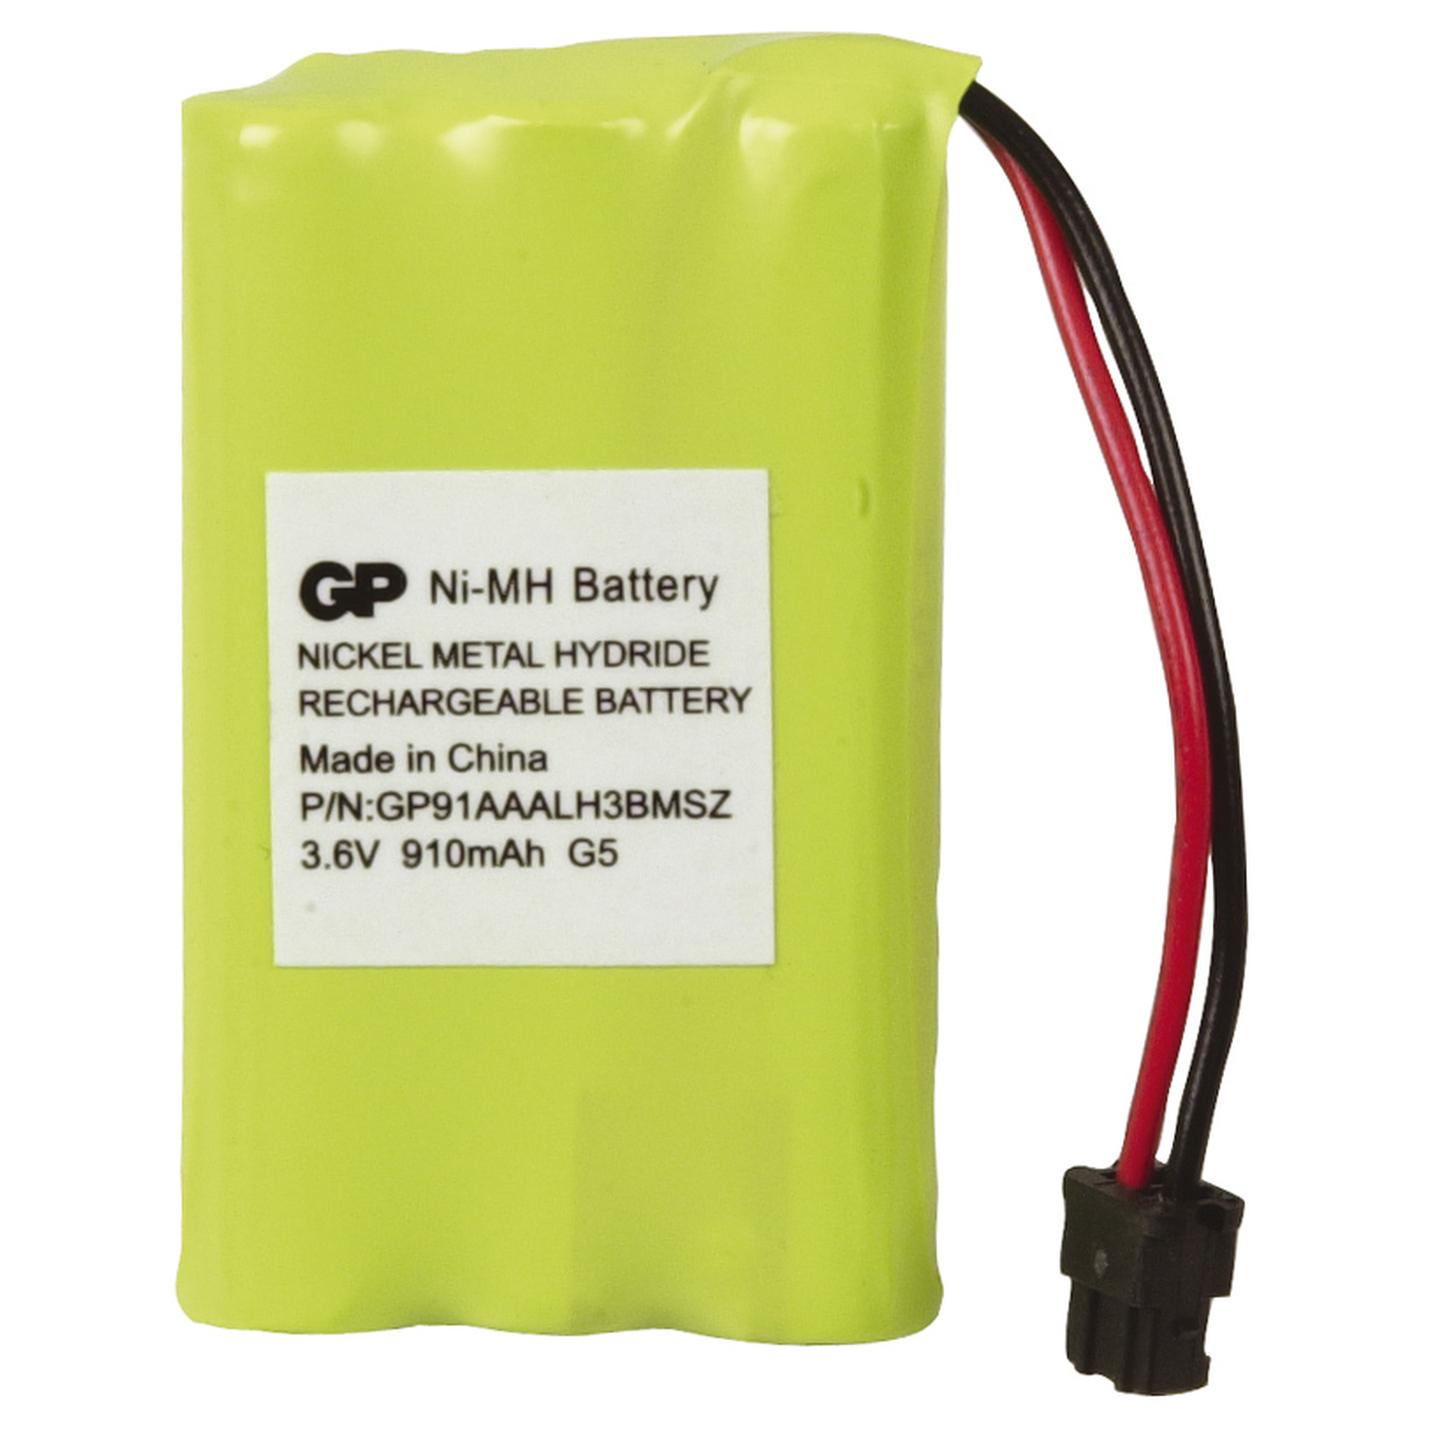 3.6V 910mAh Rechargeable Ni-MH Battery